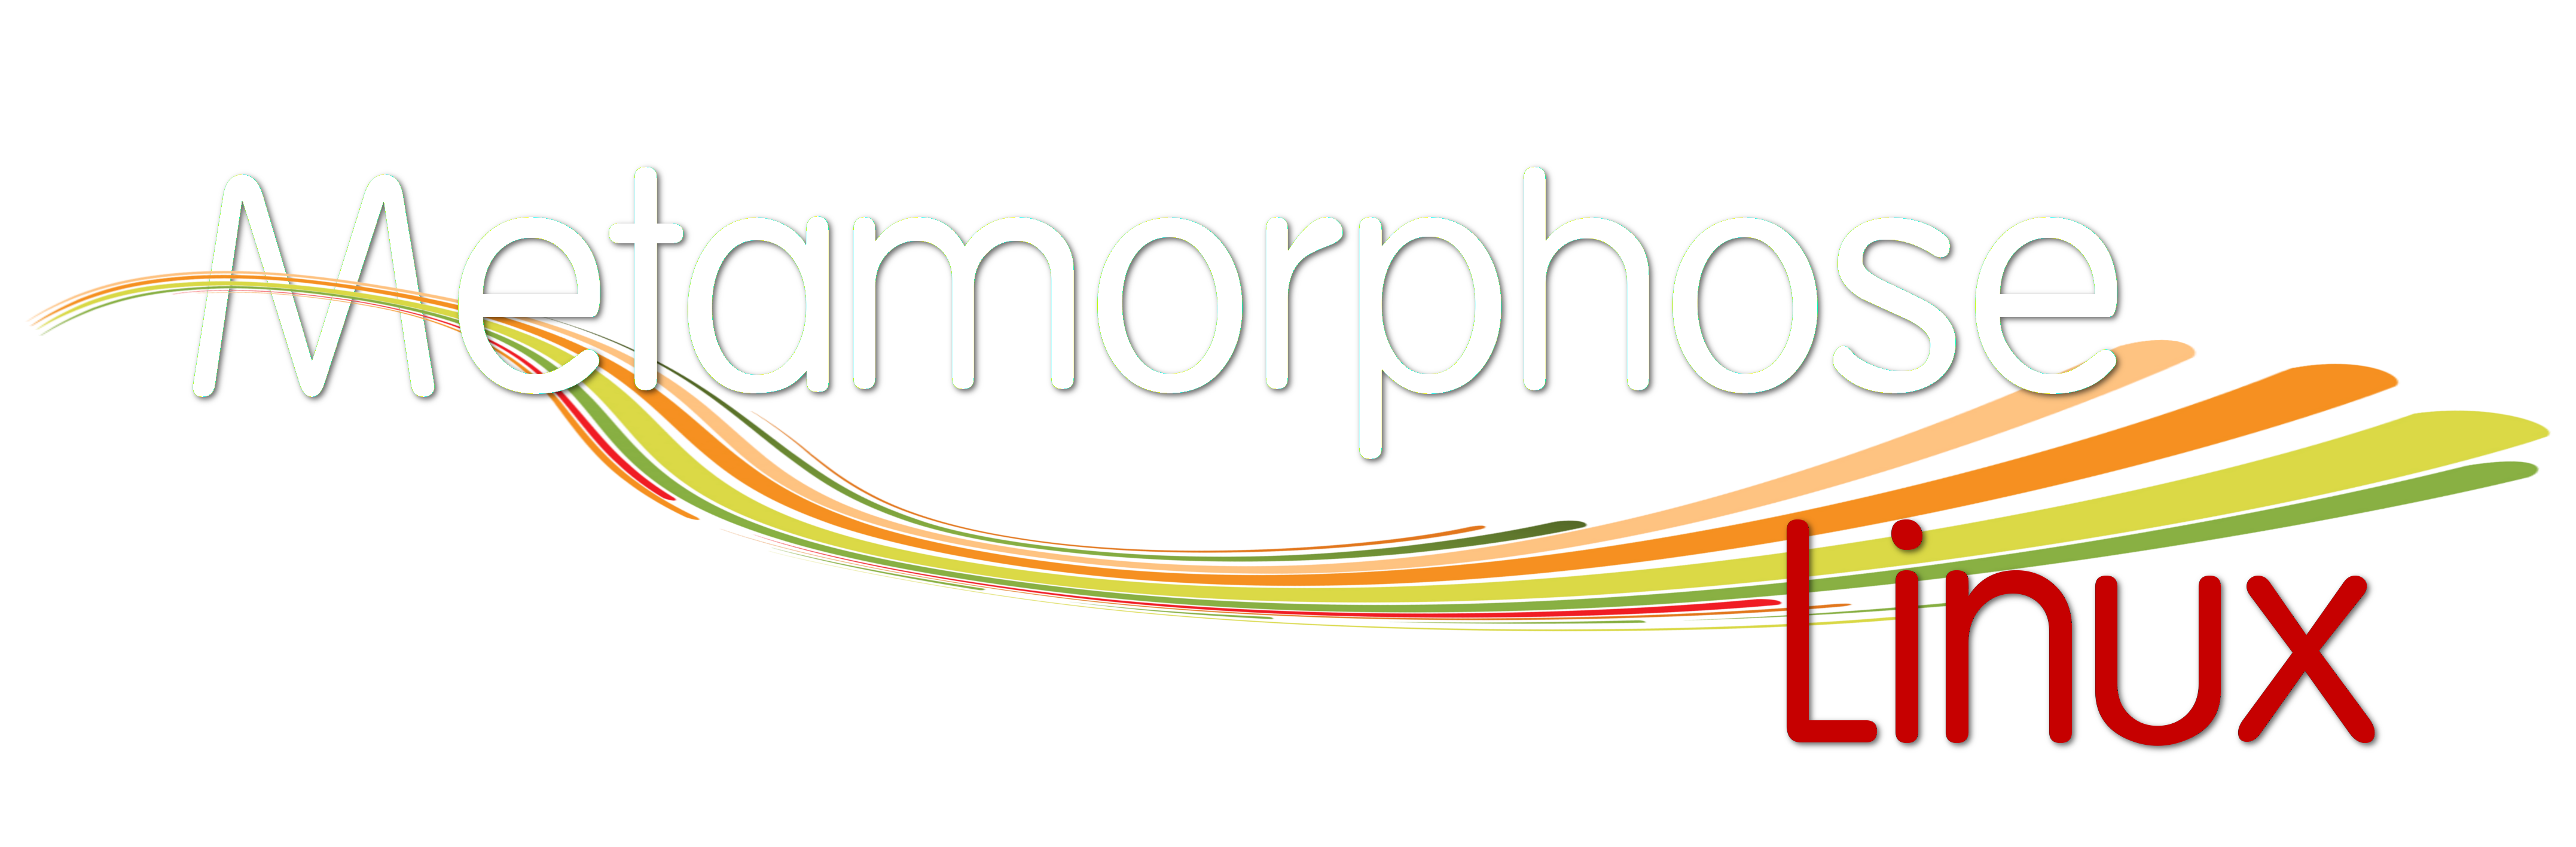 Metamorphosefaixa